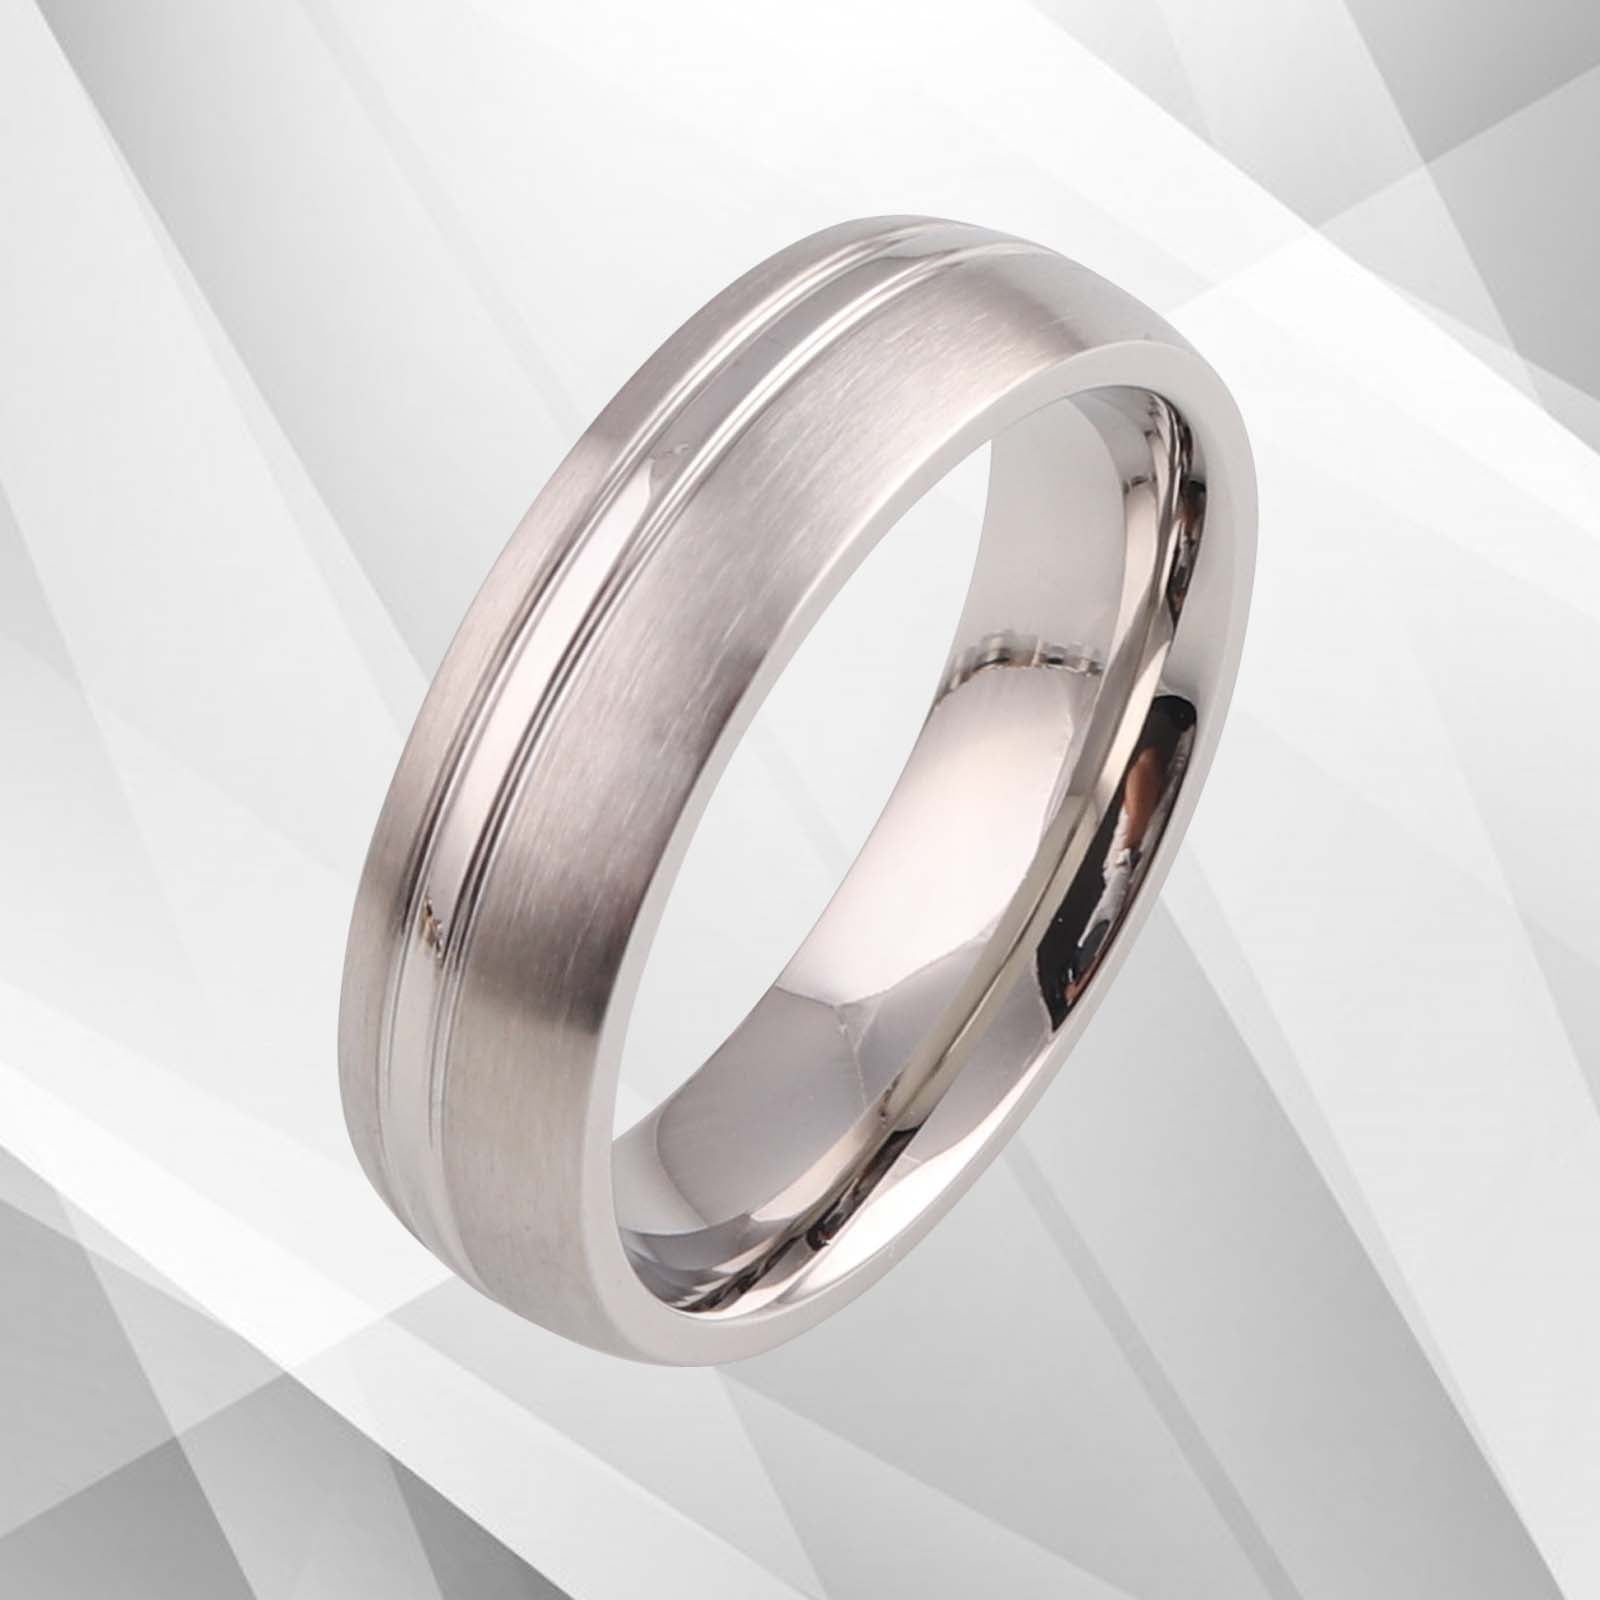 6mm Cobalt & 18Ct White Gold Finish Wedding Band Ring - Comfort Fit Bijou Her